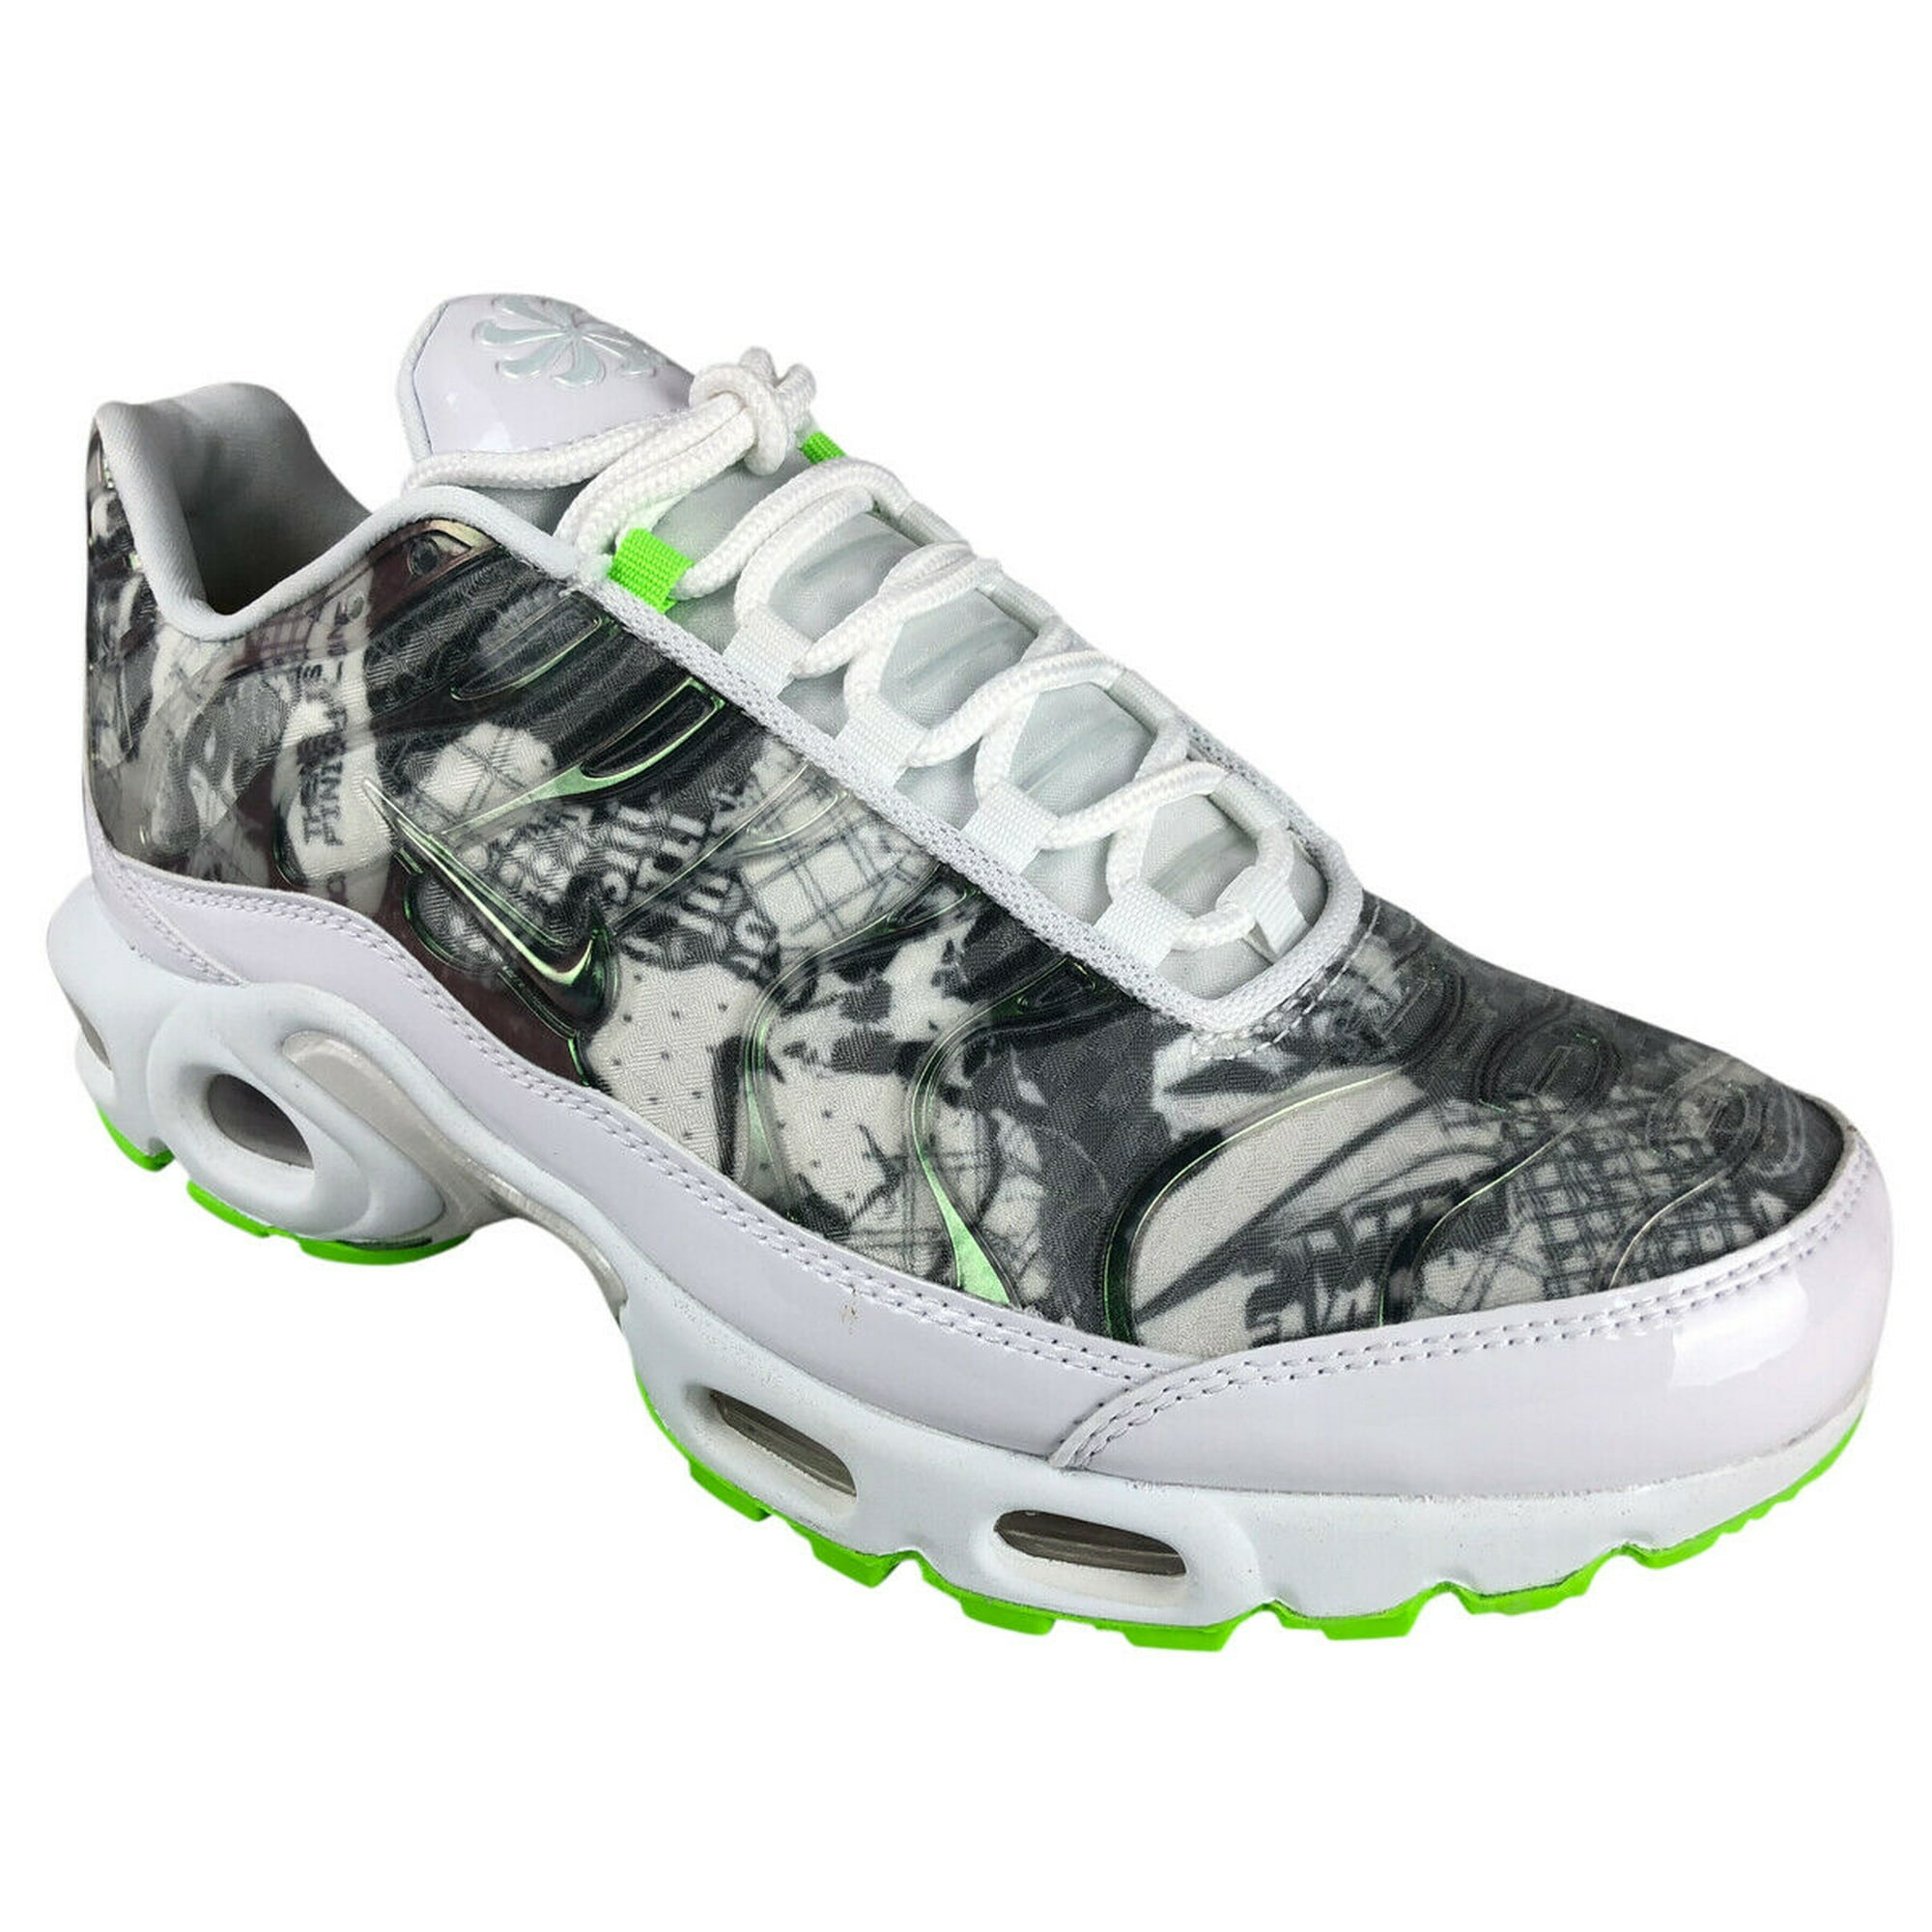 Nike Air Max Plus LX Women's running shoes Multiple sizes 10,Medium) Walmart.com